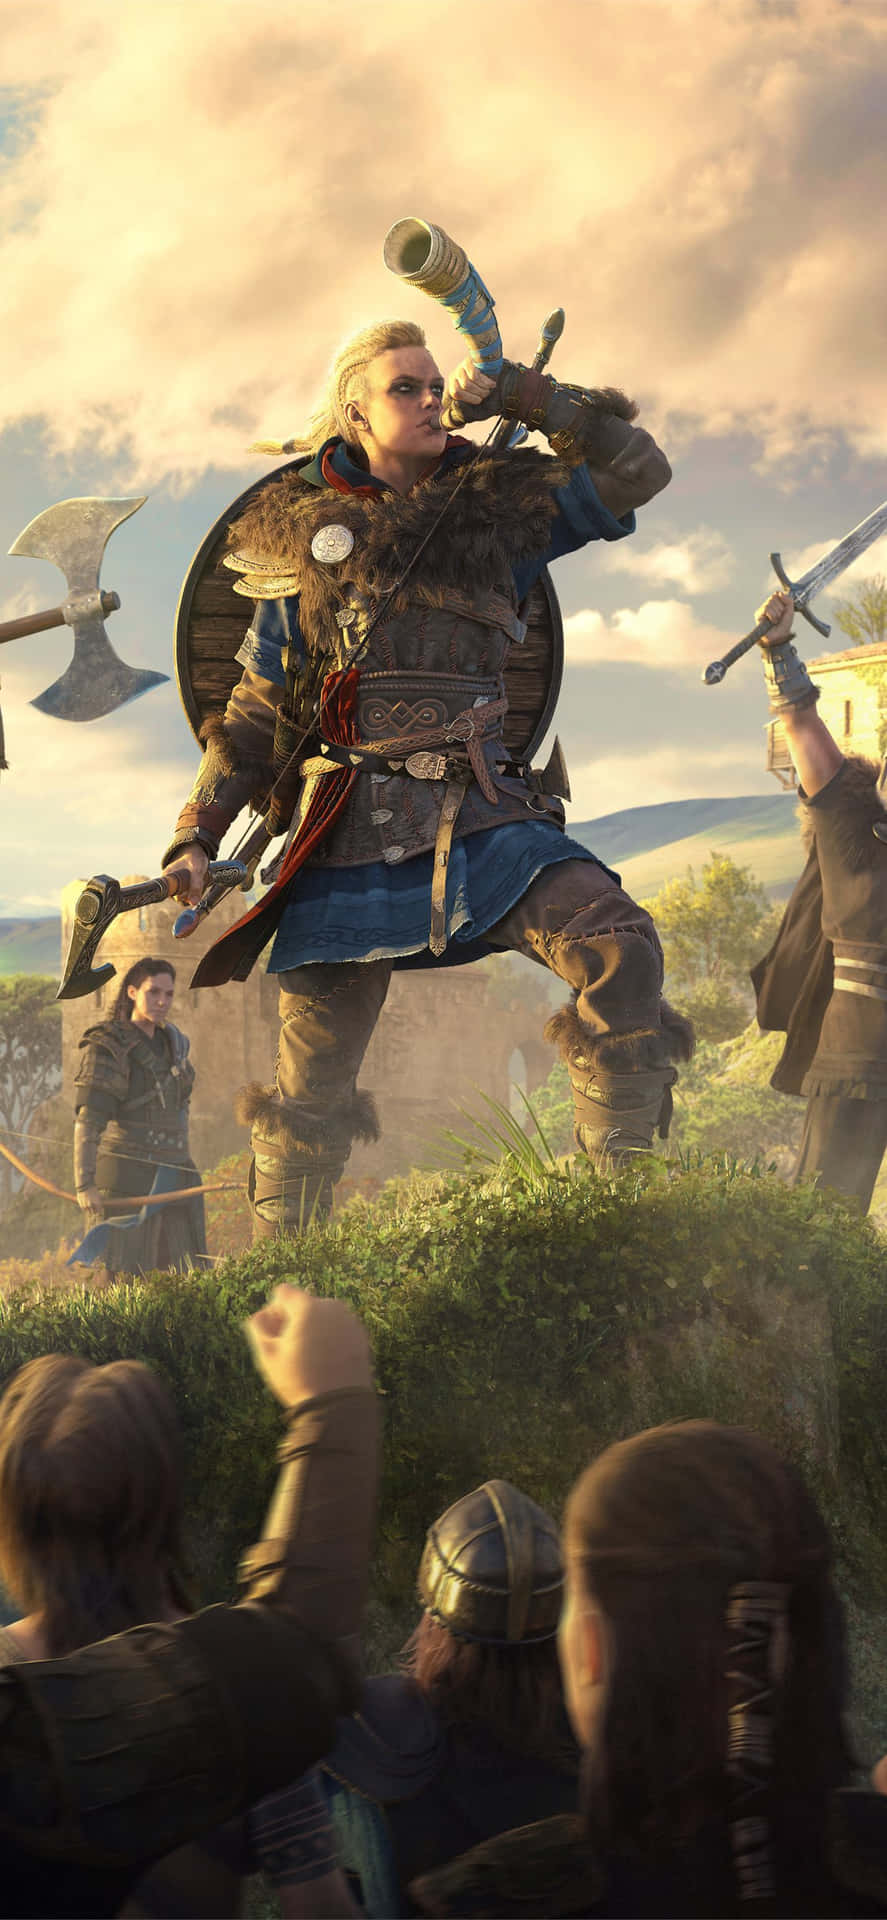 Vikingsgjallarhorn Papel De Parede Para Iphone Xs Max De Assassin's Creed Valhalla.